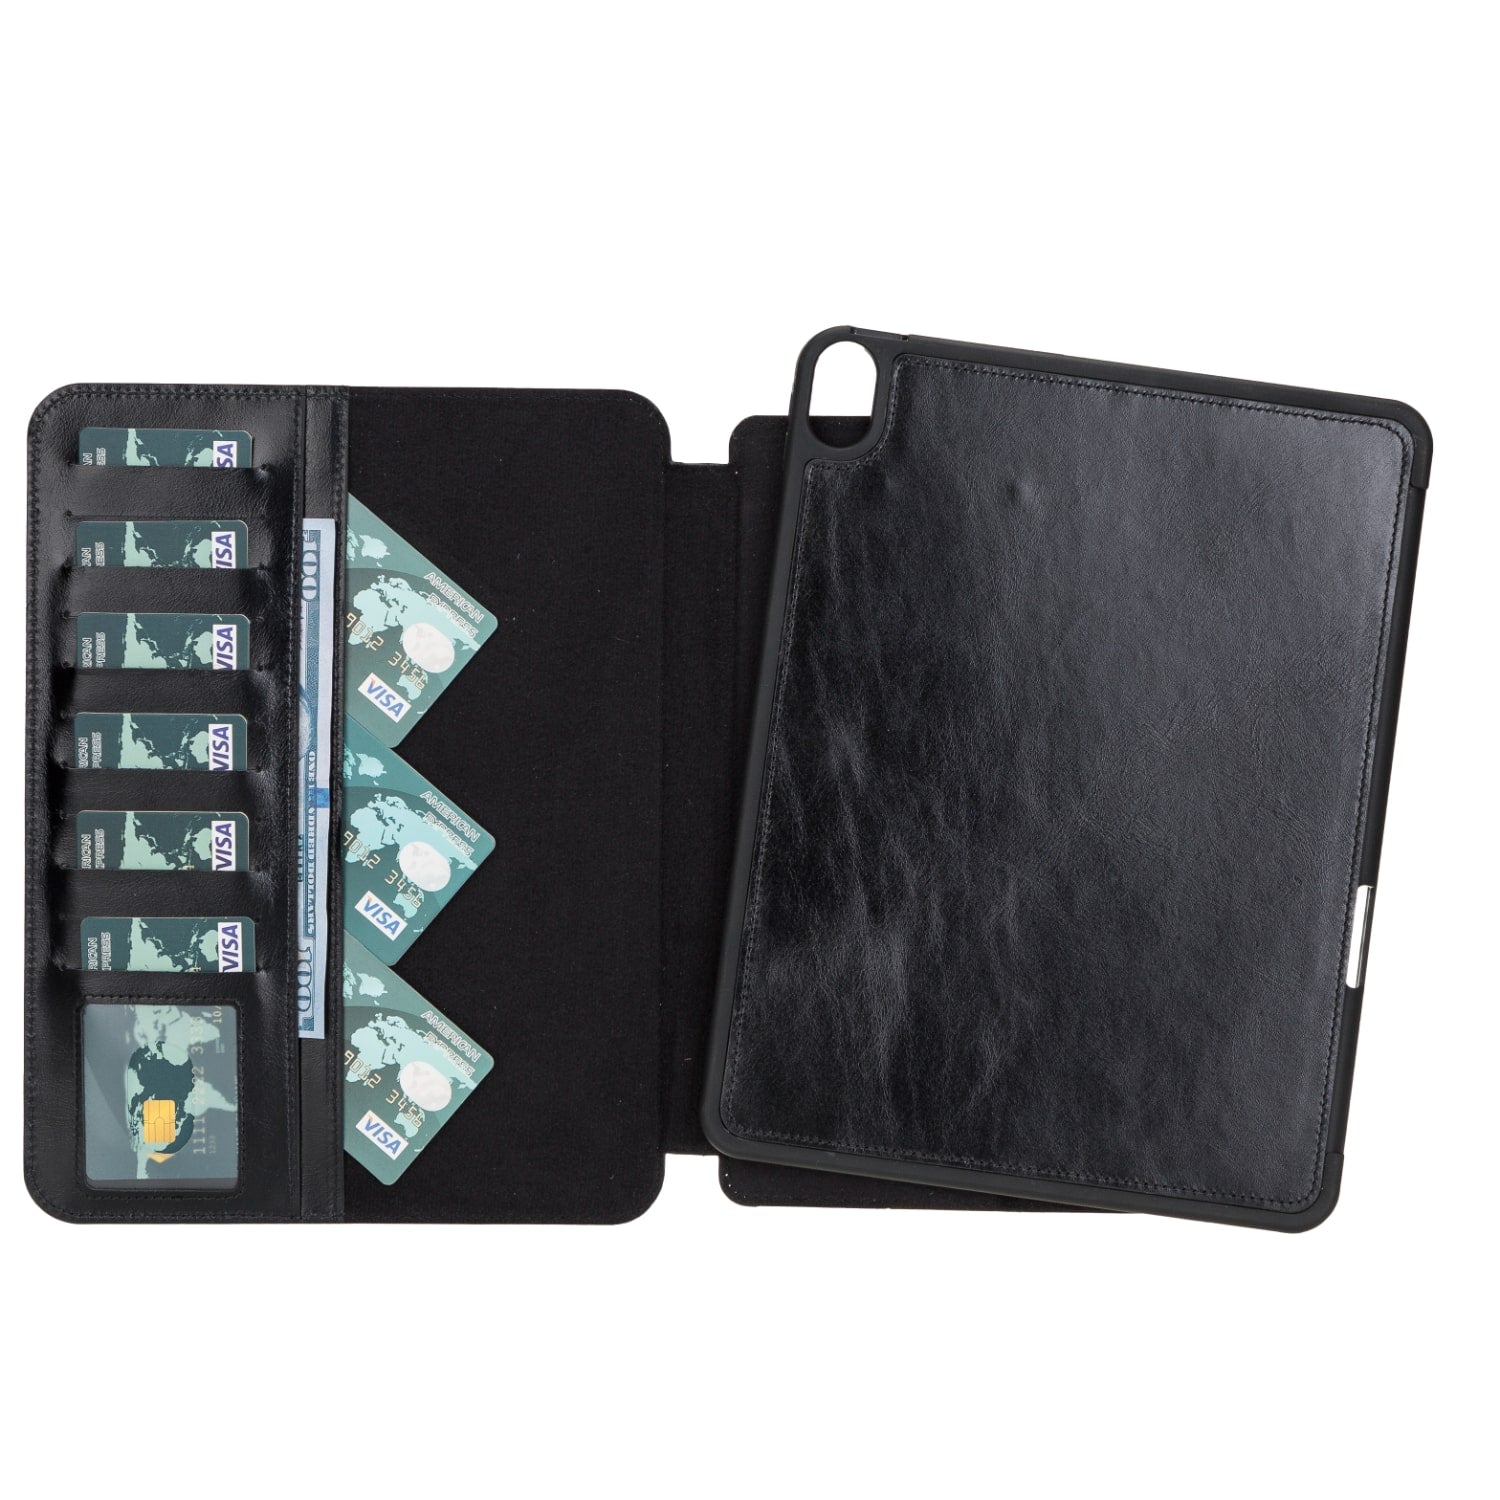 Black Leather iPad Air 10.9 Inc Smart Folio Case with Apple Pen Holder - Bomonti - 1